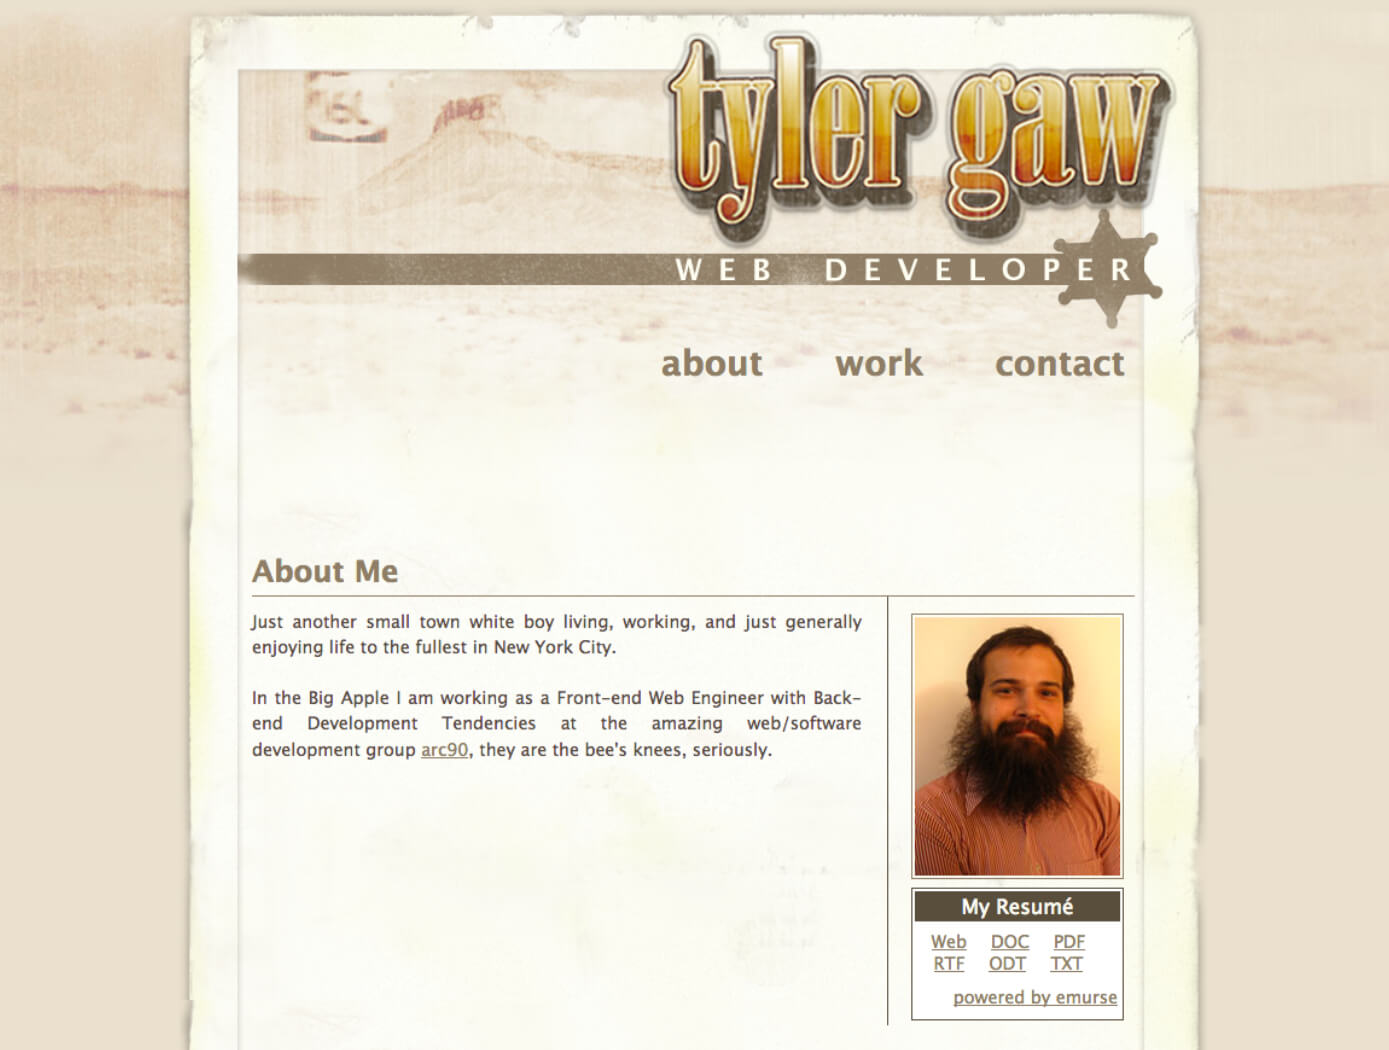 A screenshot of version 2 of tylergaw.com